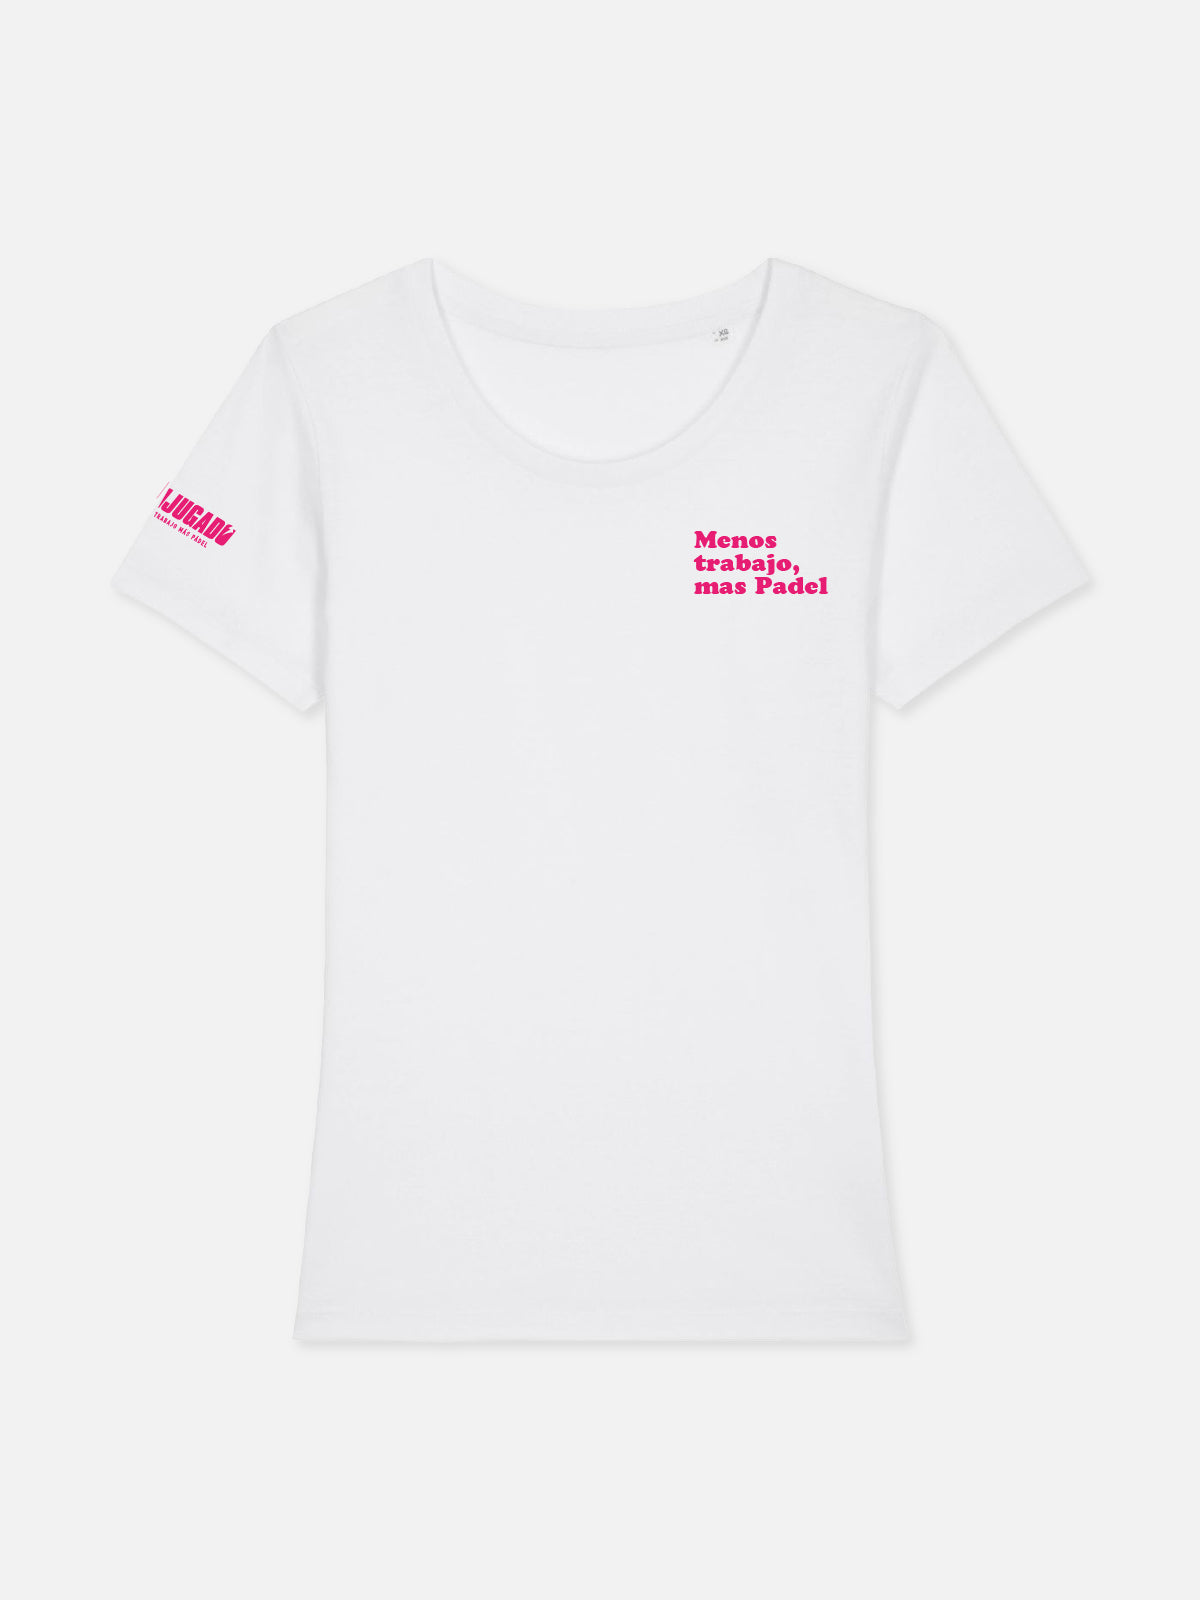 Women's Fun T-Shirt - Menos Trabajo, Mas Padel